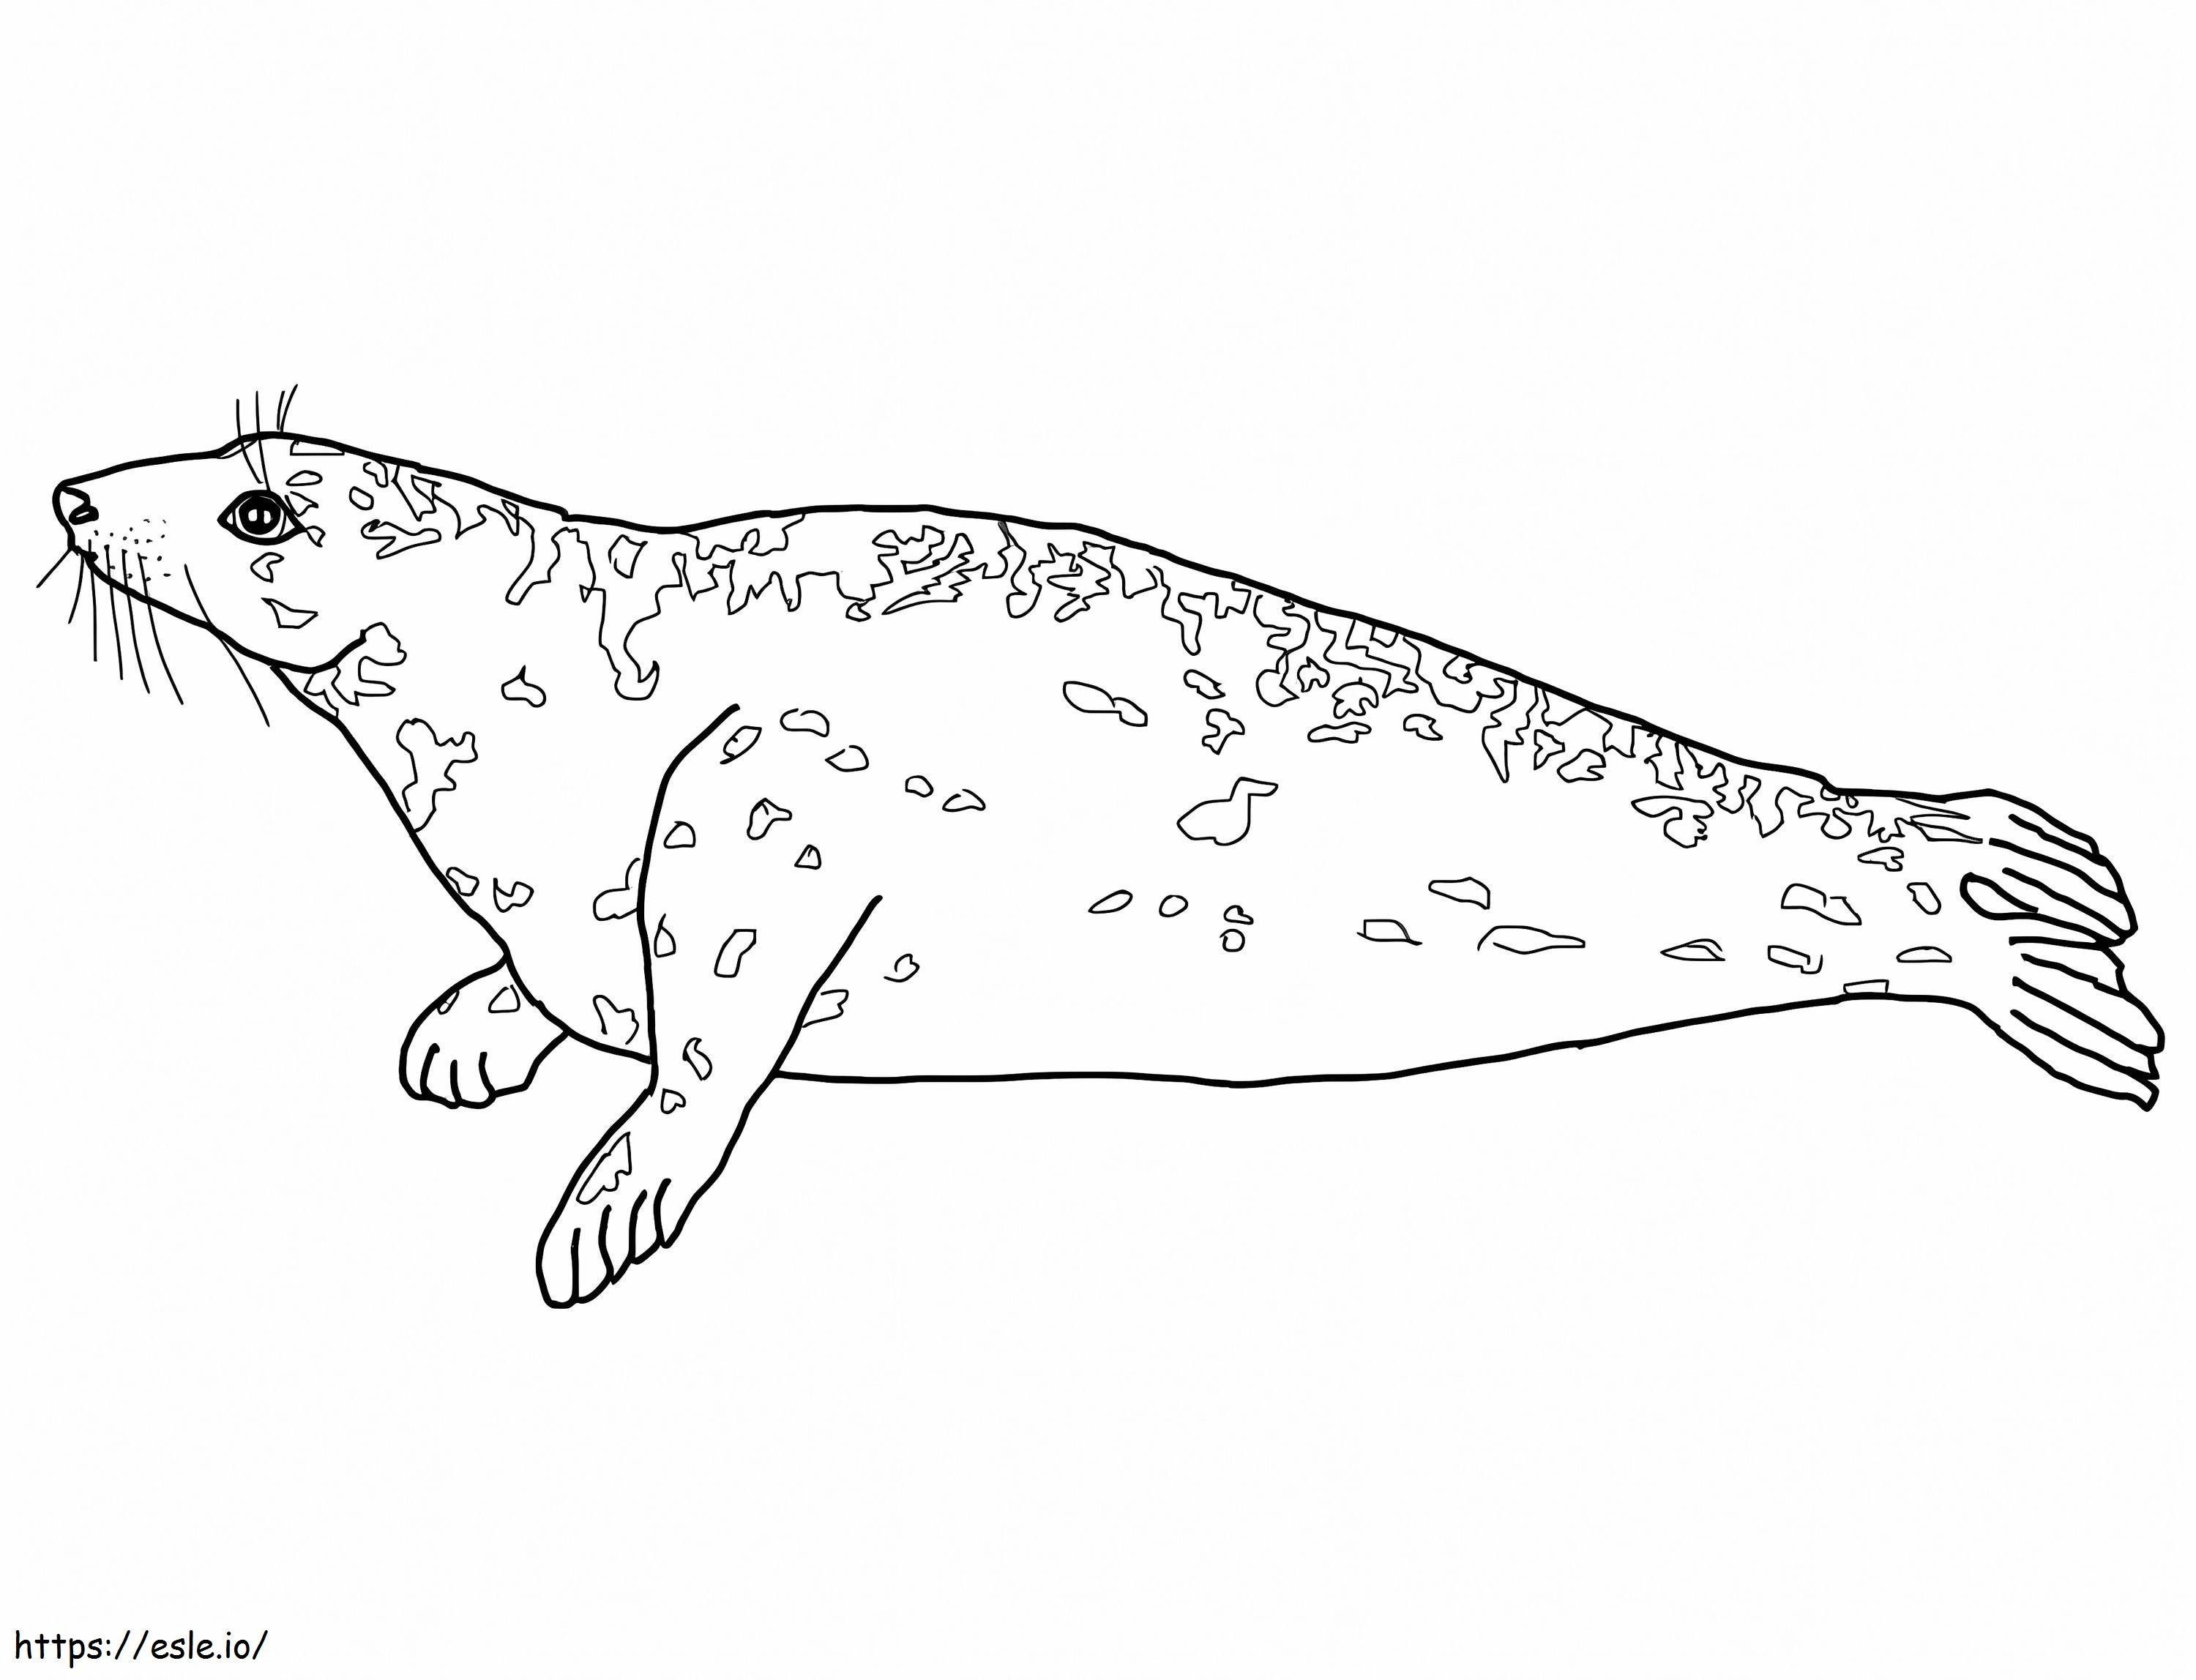 Gray Seal coloring page